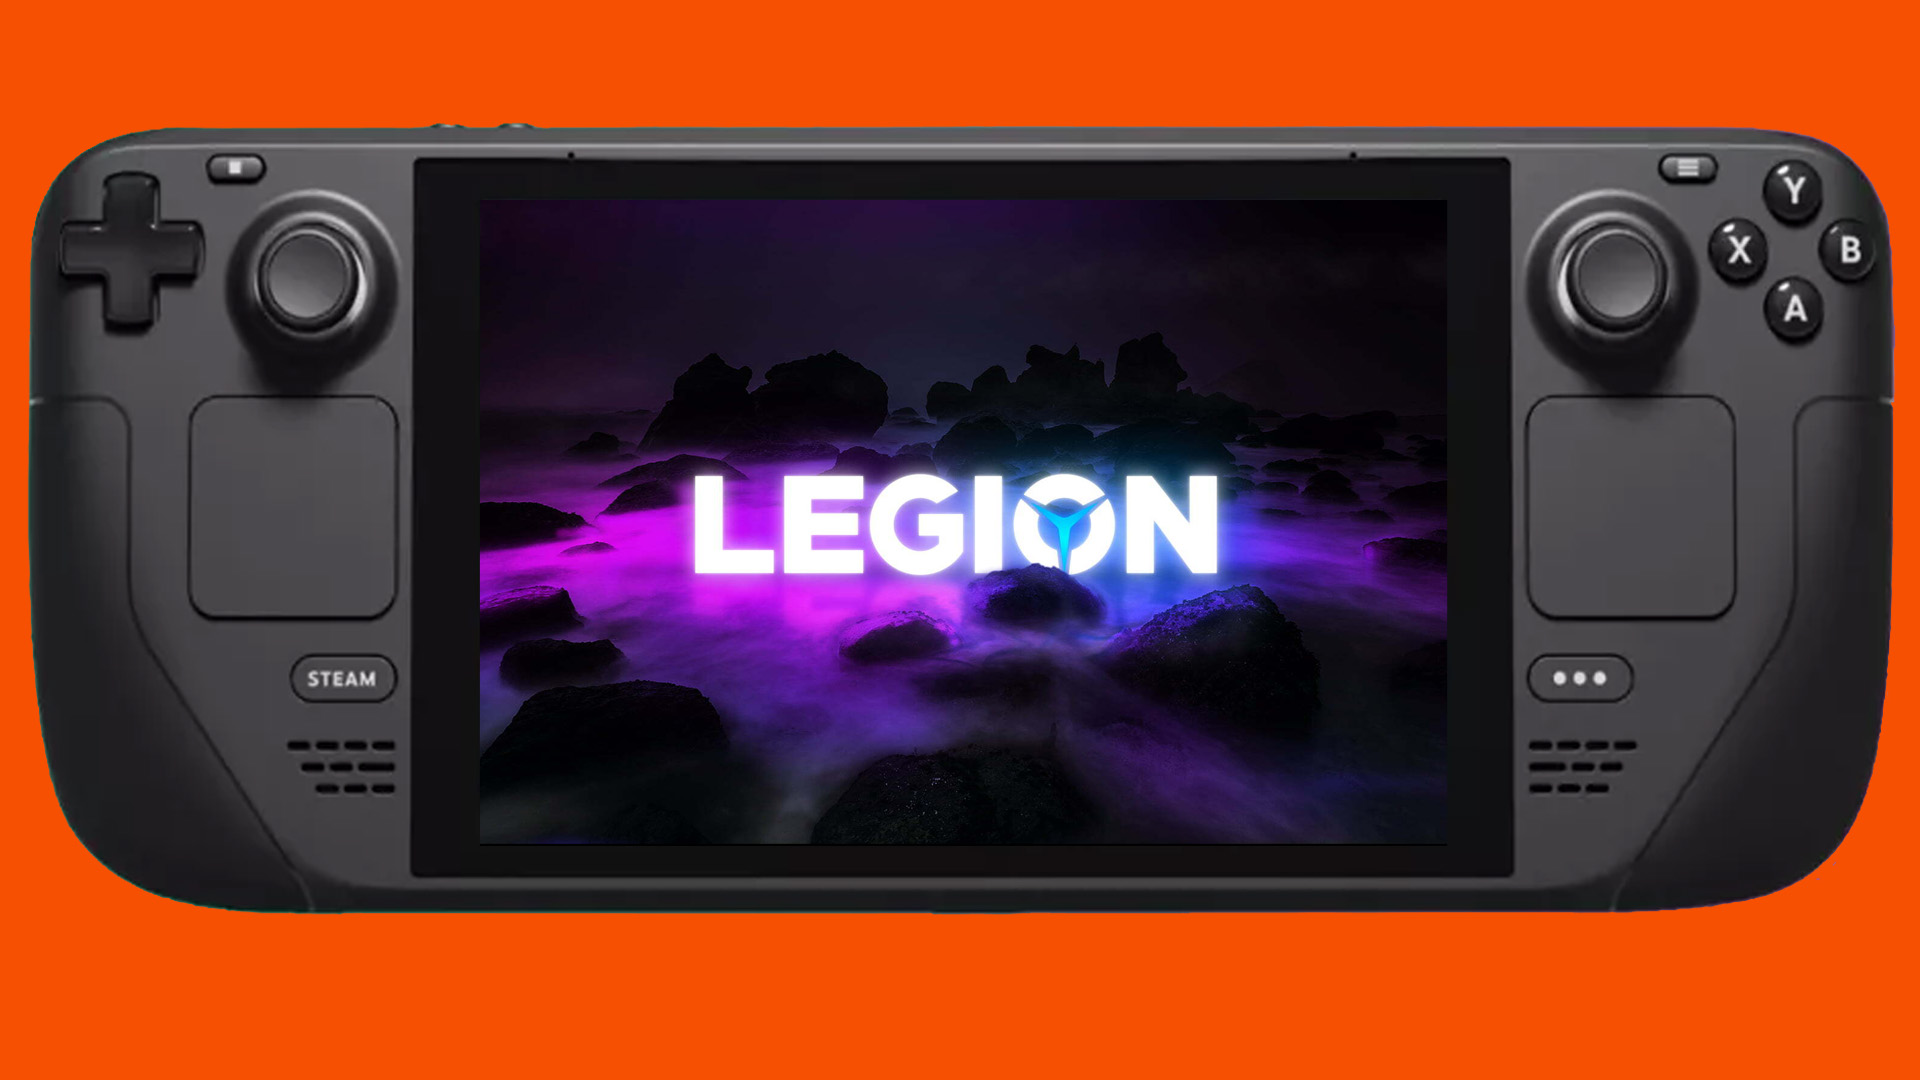 Lenovo Legion Go images reveal a Nintendo Switch-like Steam Deck rival